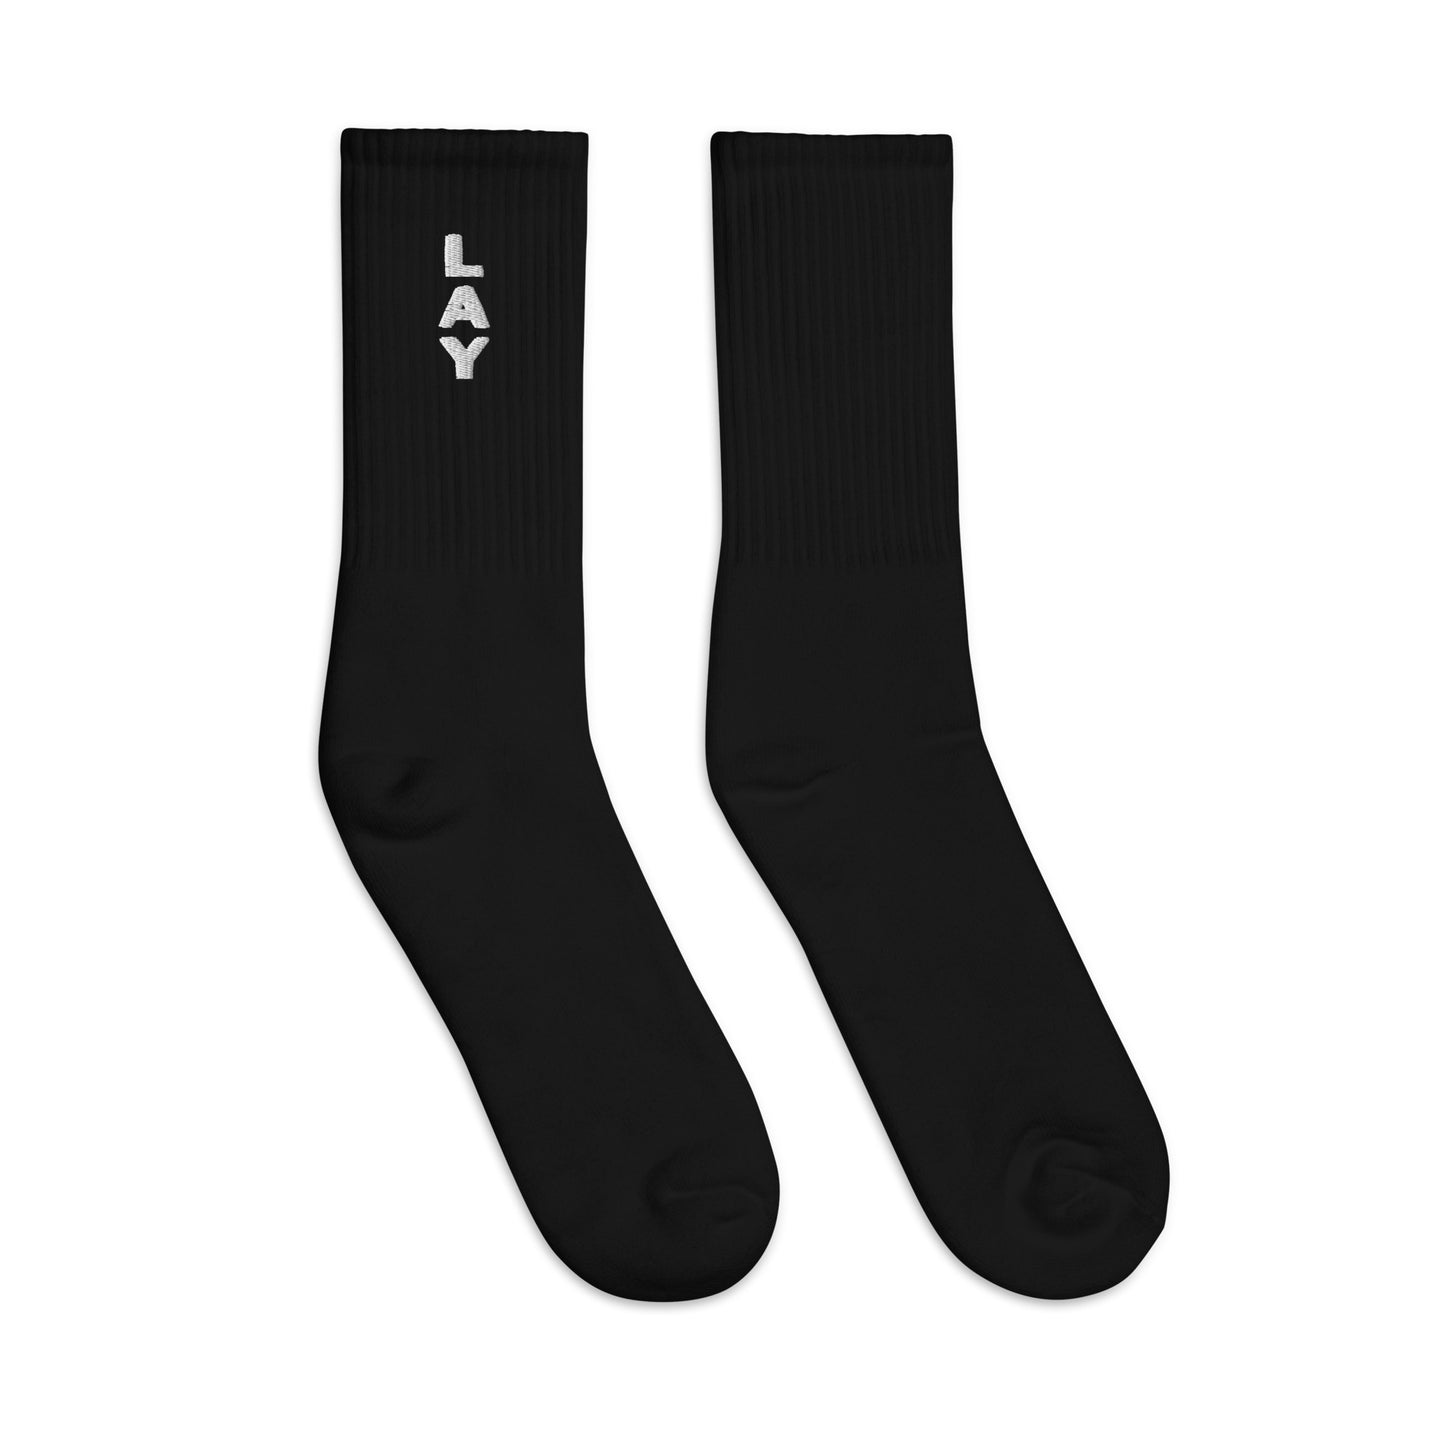 lay socks (black)